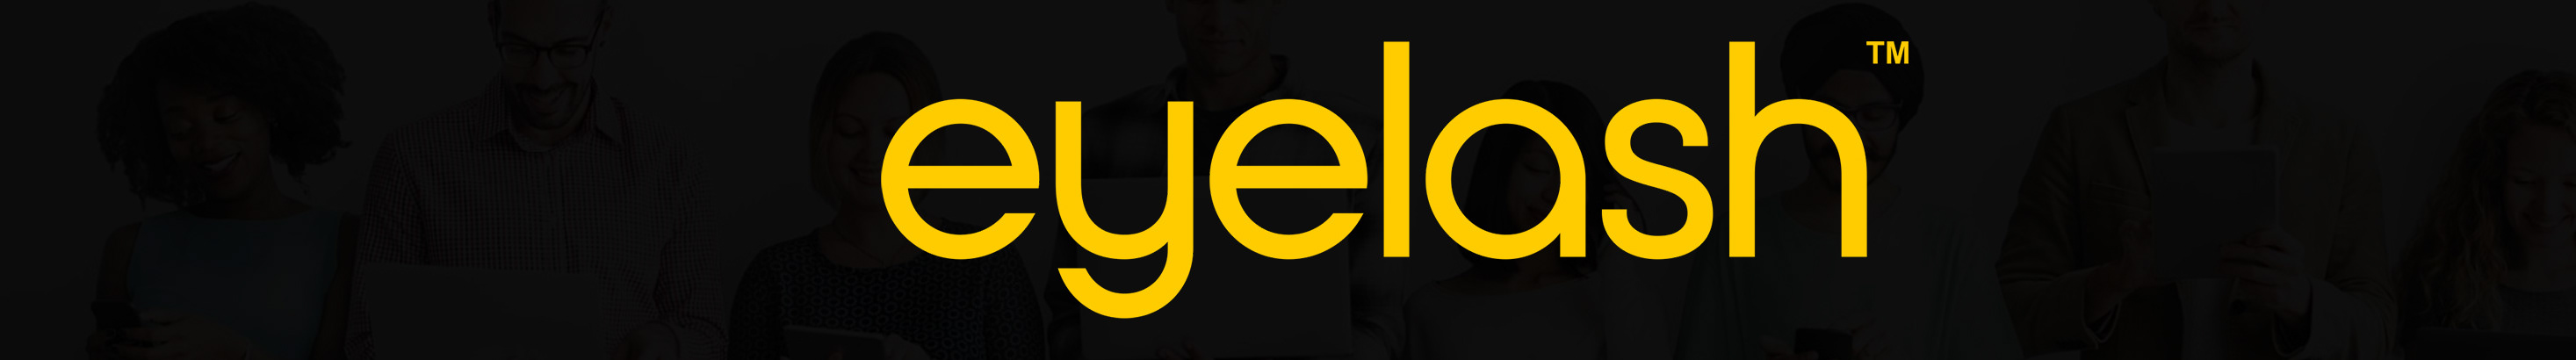 Eyelash Technologies's profile banner